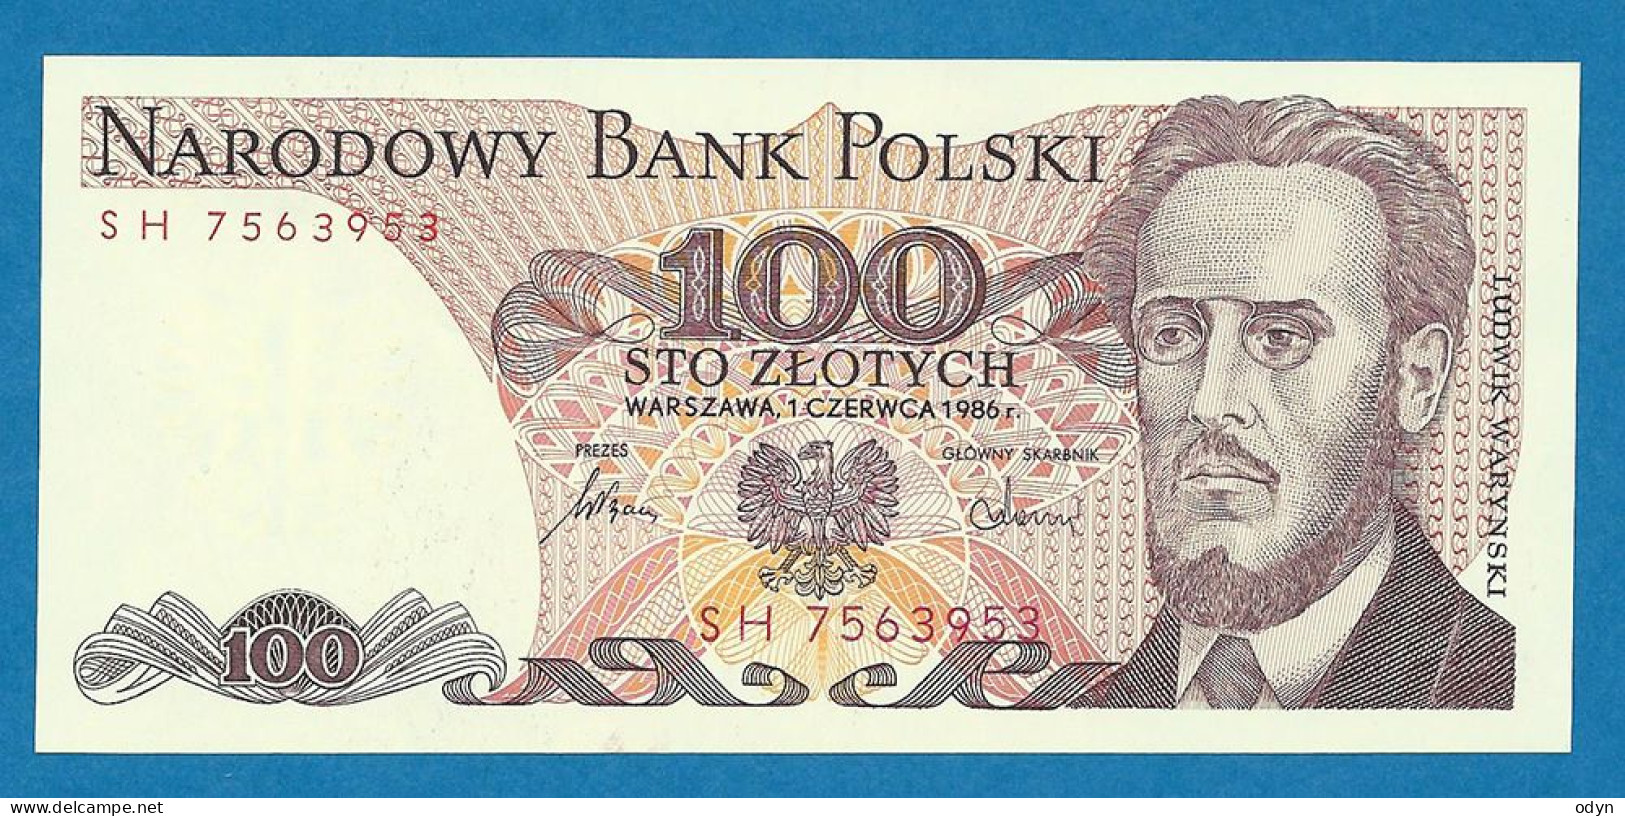 Poland, 1986, 1988; lot of 24 banknotes 100 zlotych, UNC, -UNC, AU - see description